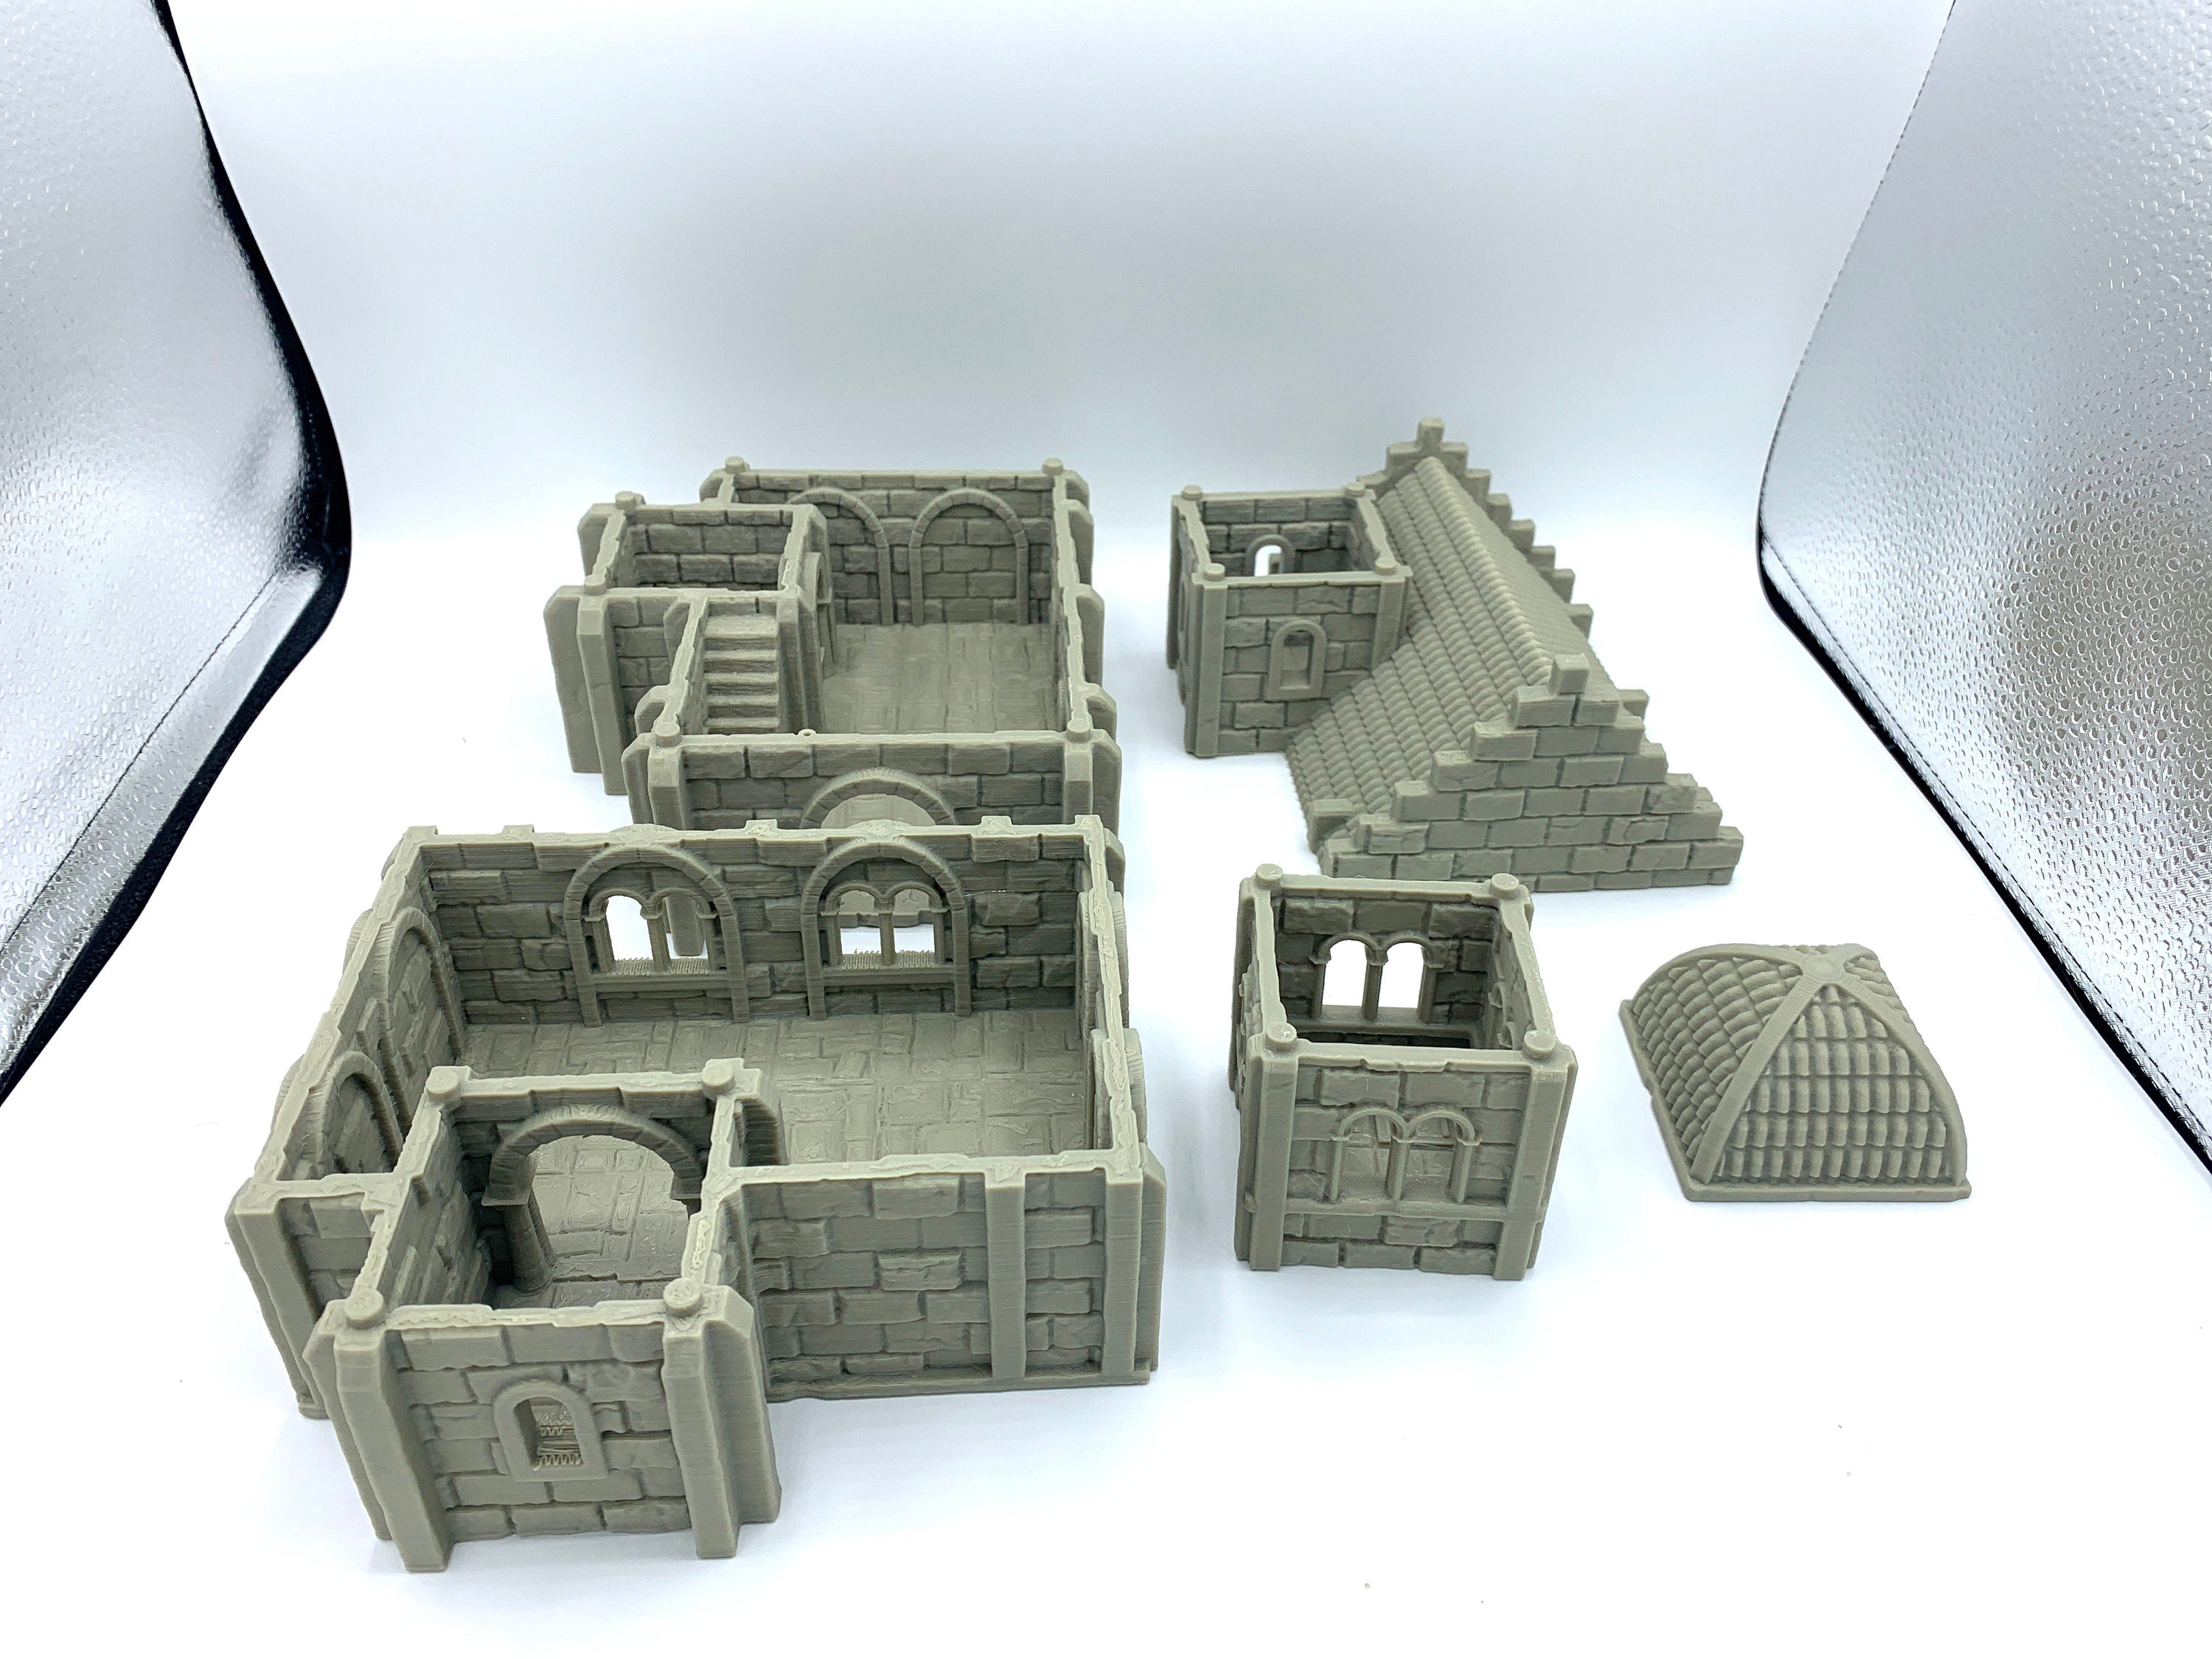 Arkenfel House 3 / Dark Realms Terrain / RPG and Wargame 3d Printed Tabletop Terrain / Licensed Printer